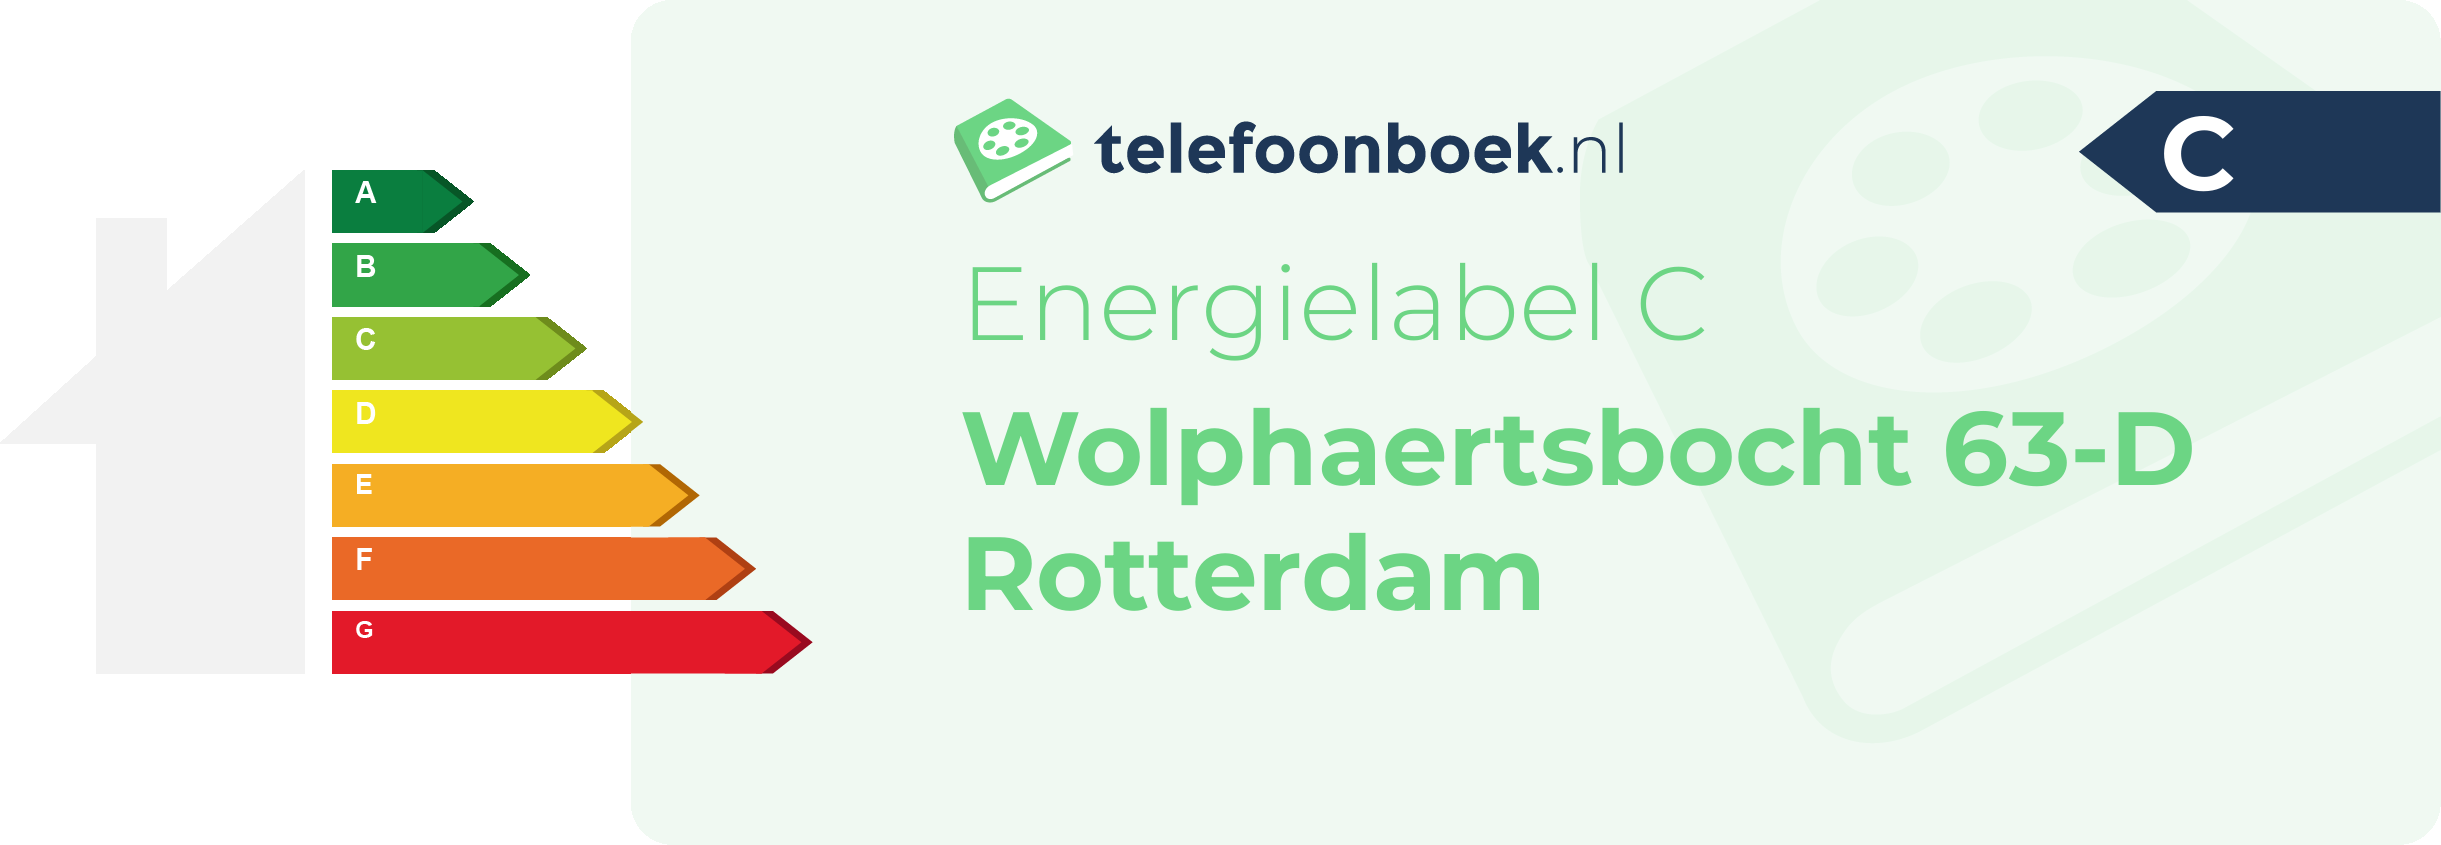 Energielabel Wolphaertsbocht 63-D Rotterdam